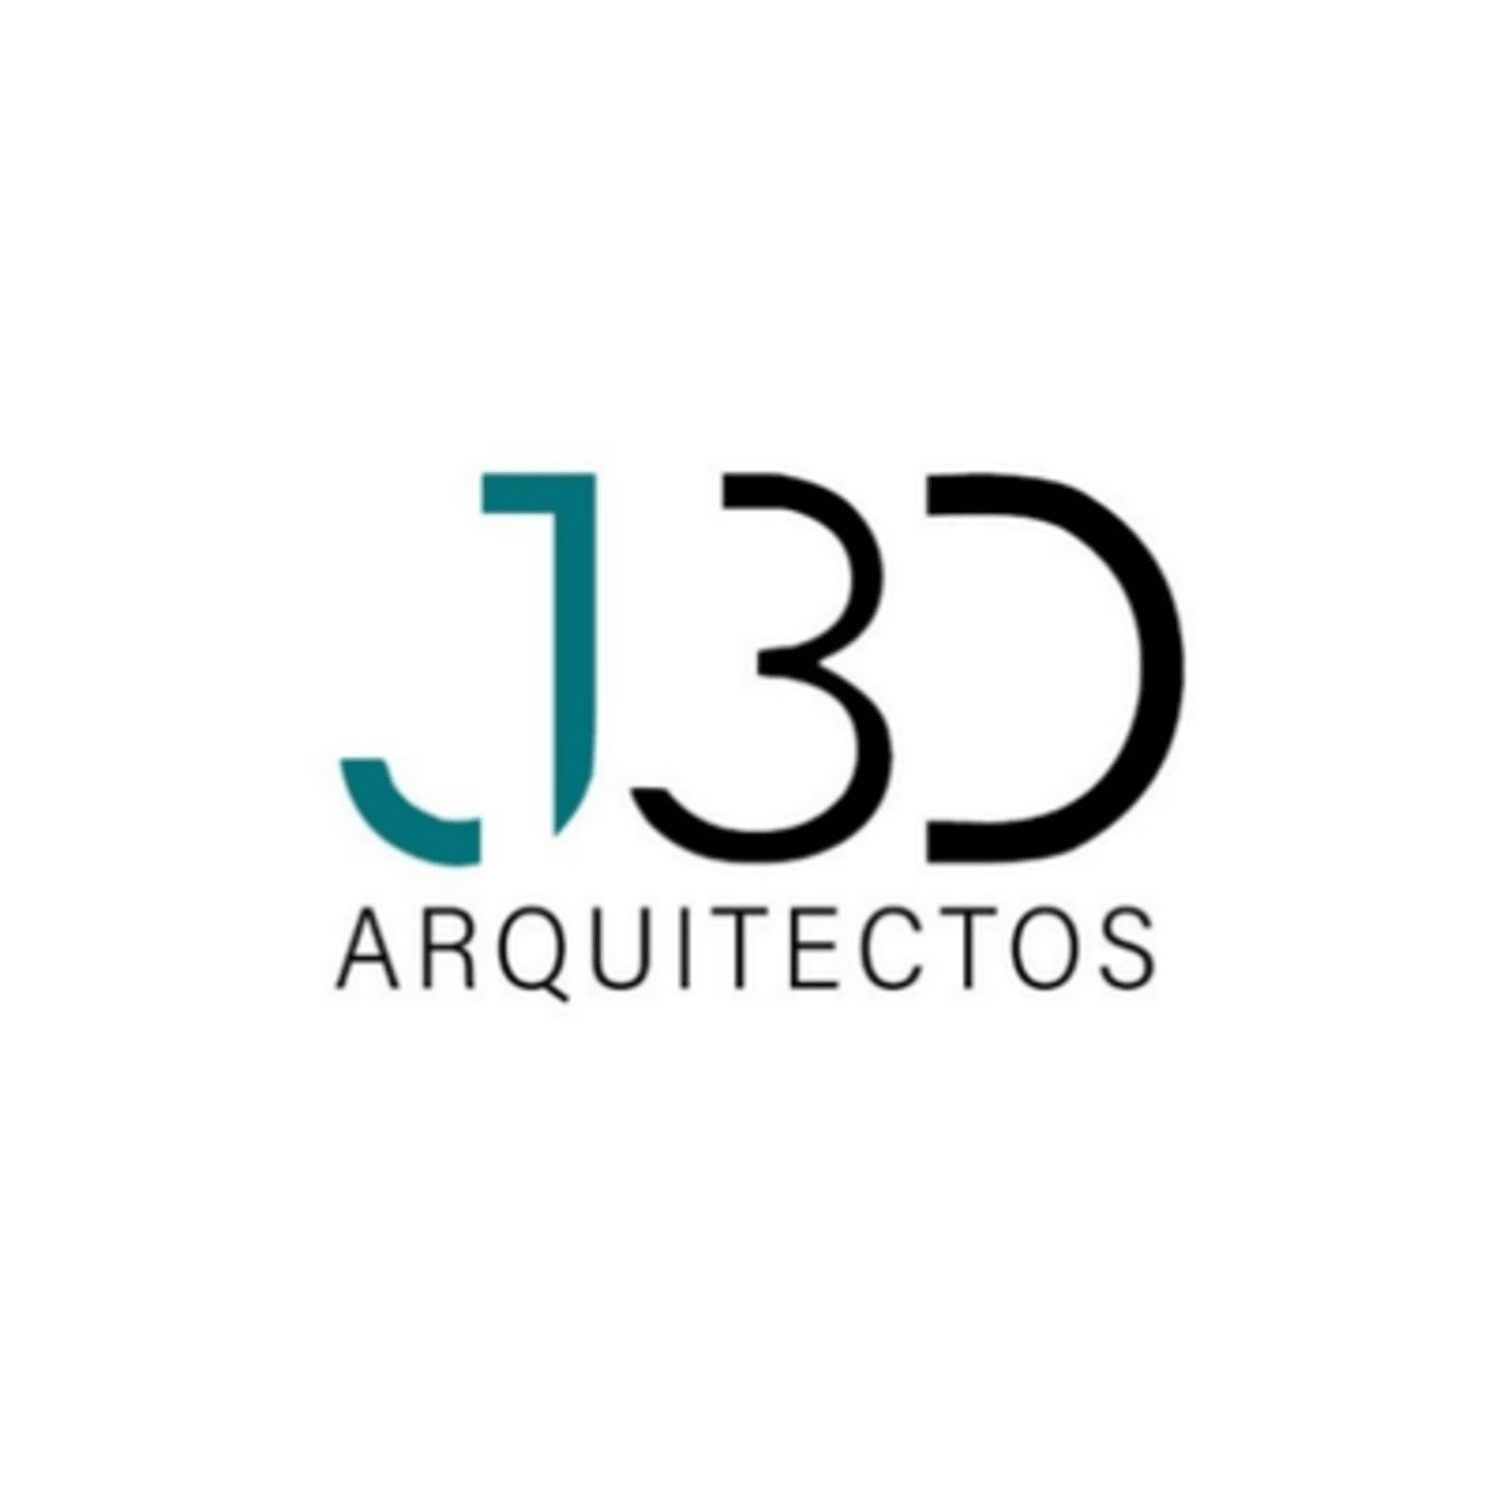 J3D Arquitectos